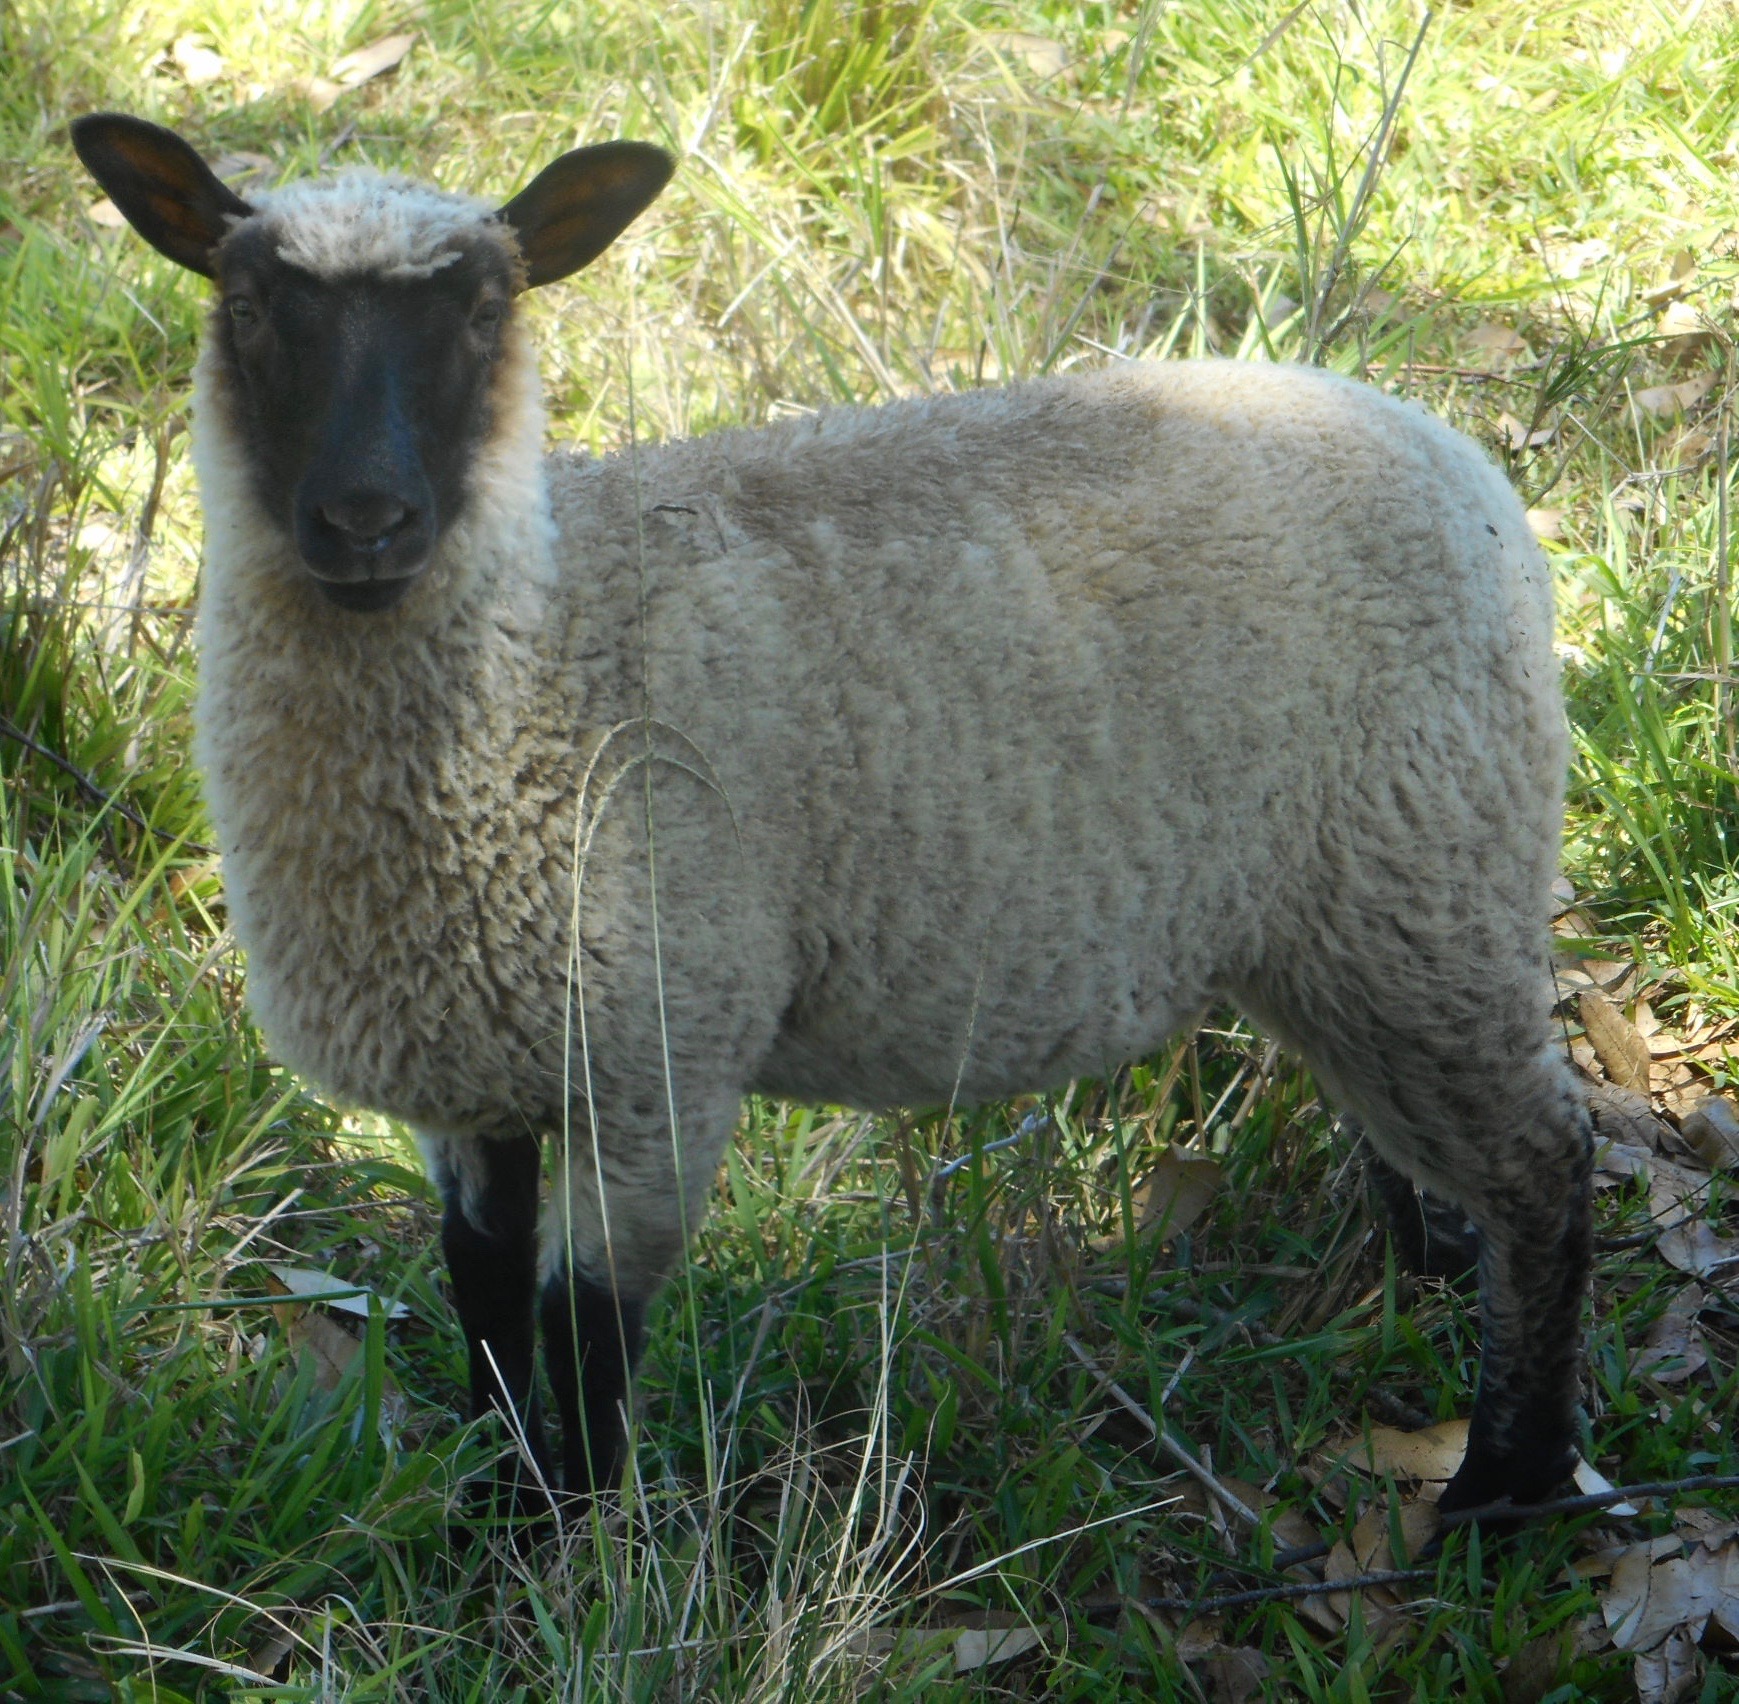 Leaf's 1st born ewe lamb